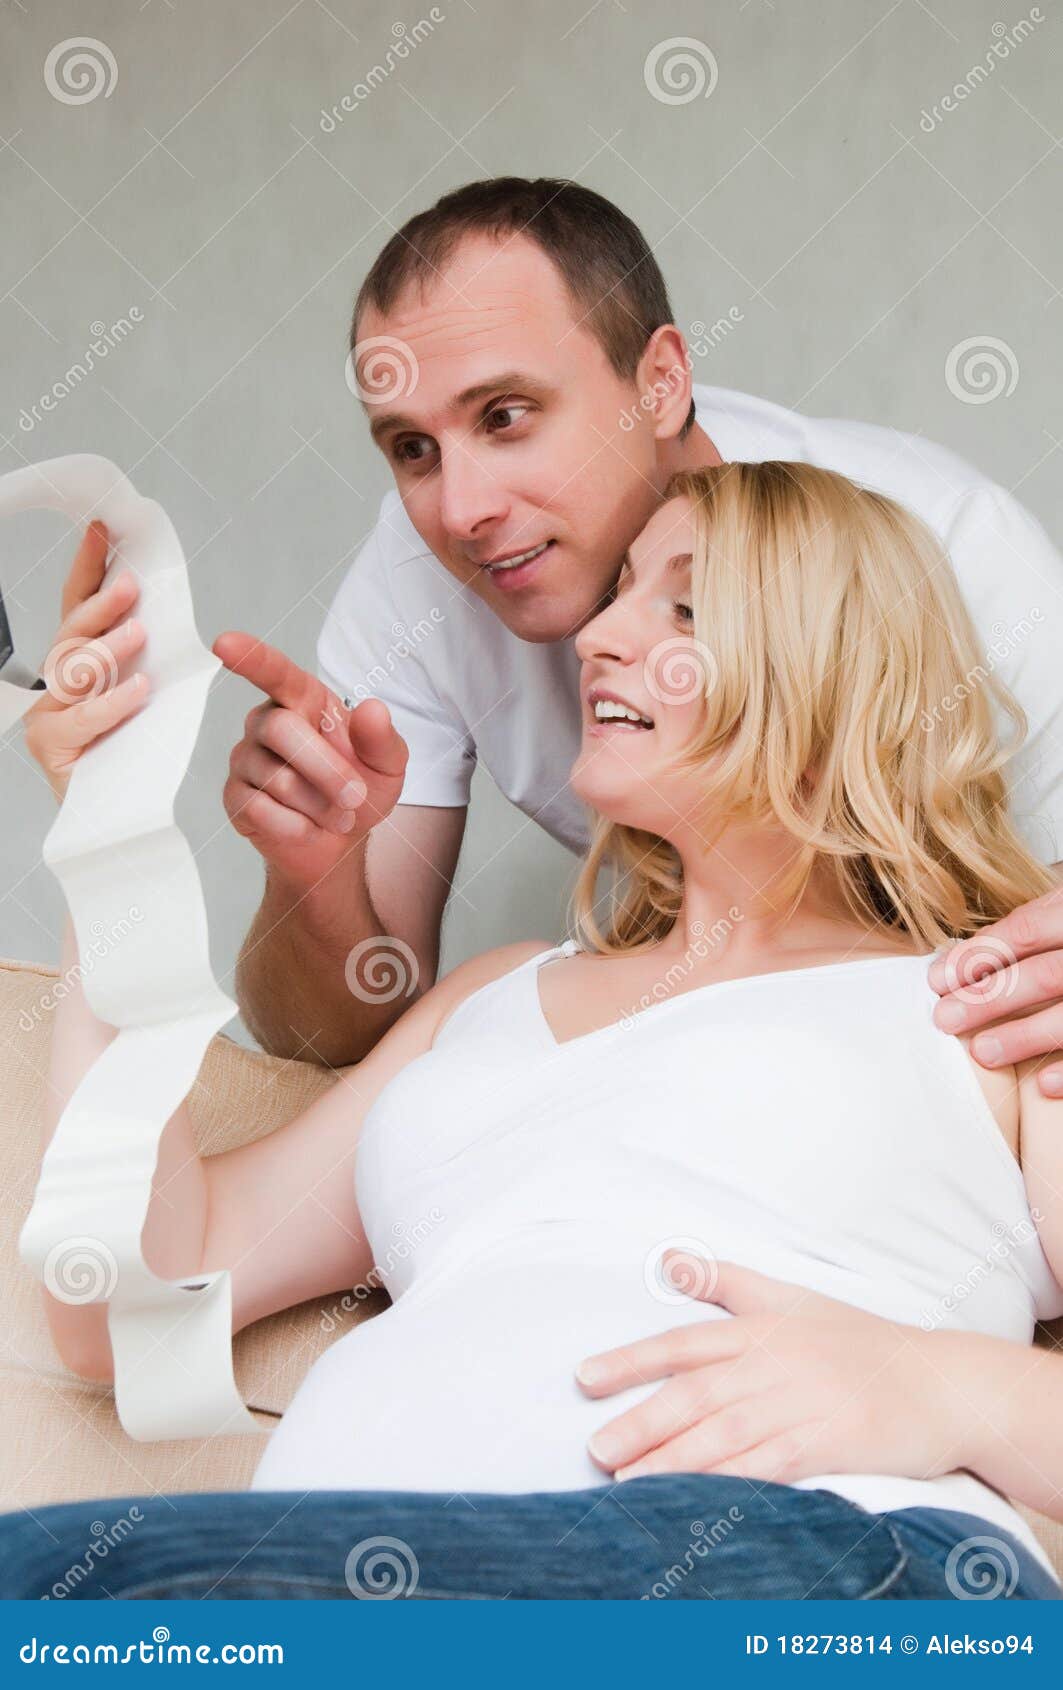 https://thumbs.dreamstime.com/z/happy-pregnant-couple-18273814.jpg